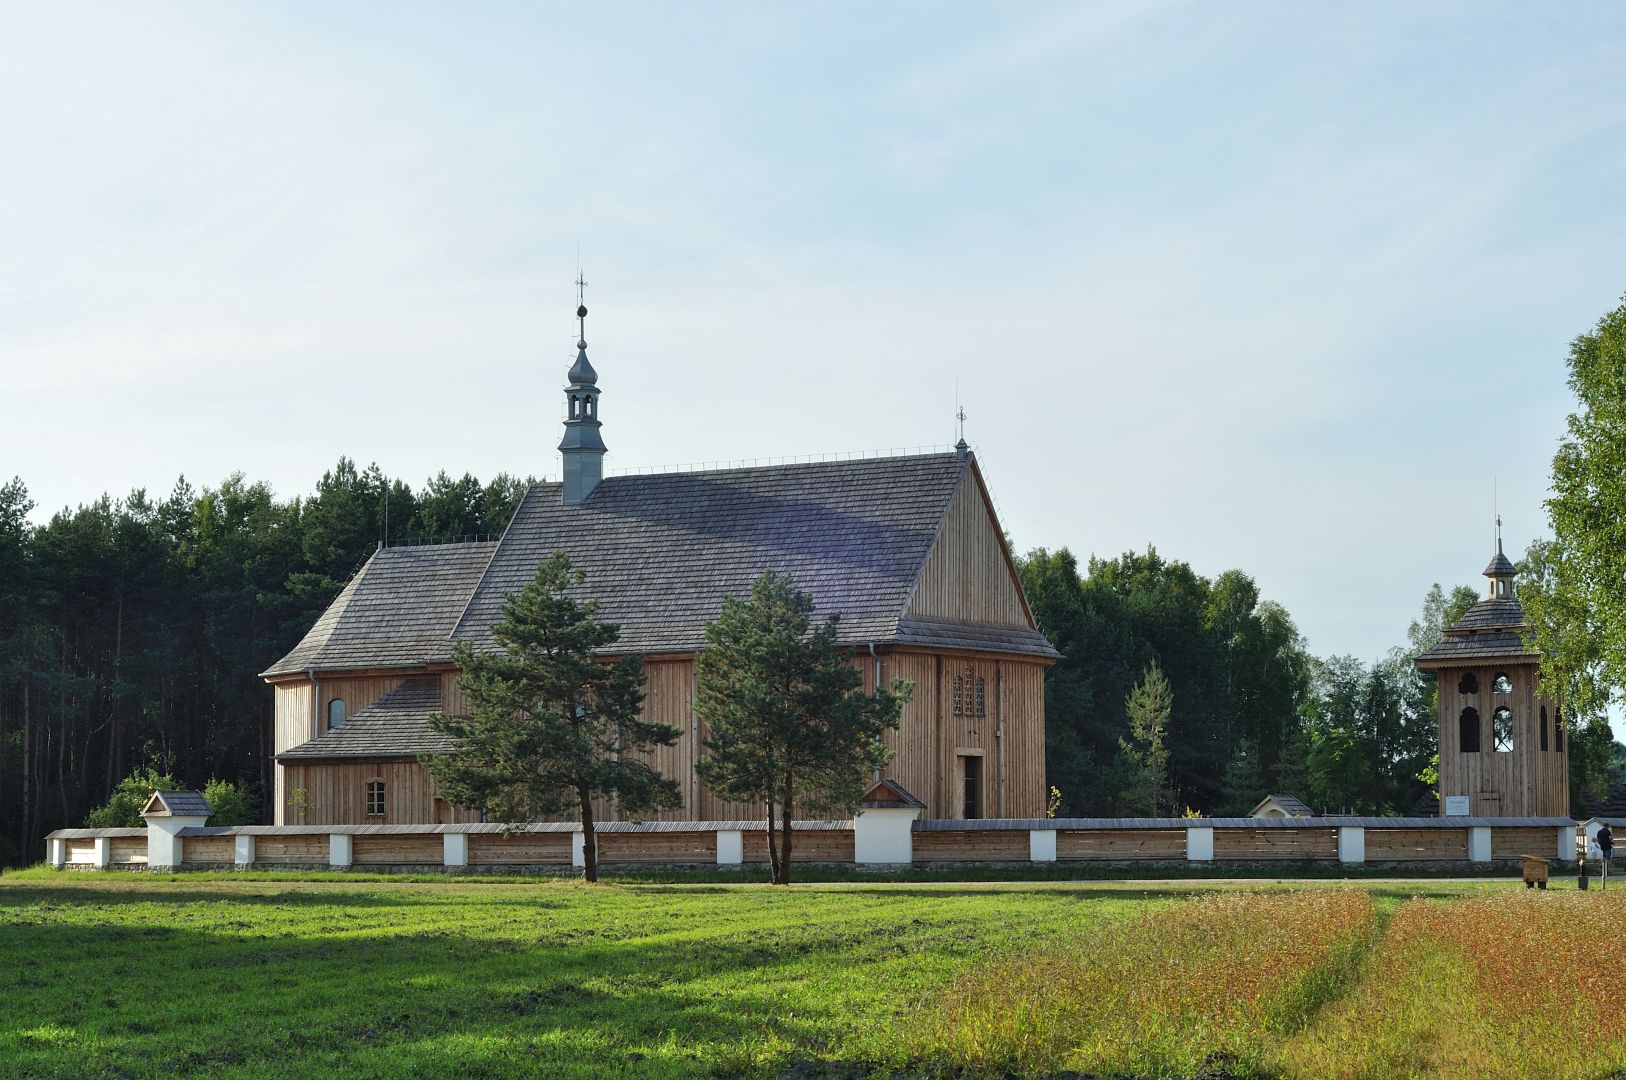 The church Marek from Rzochów